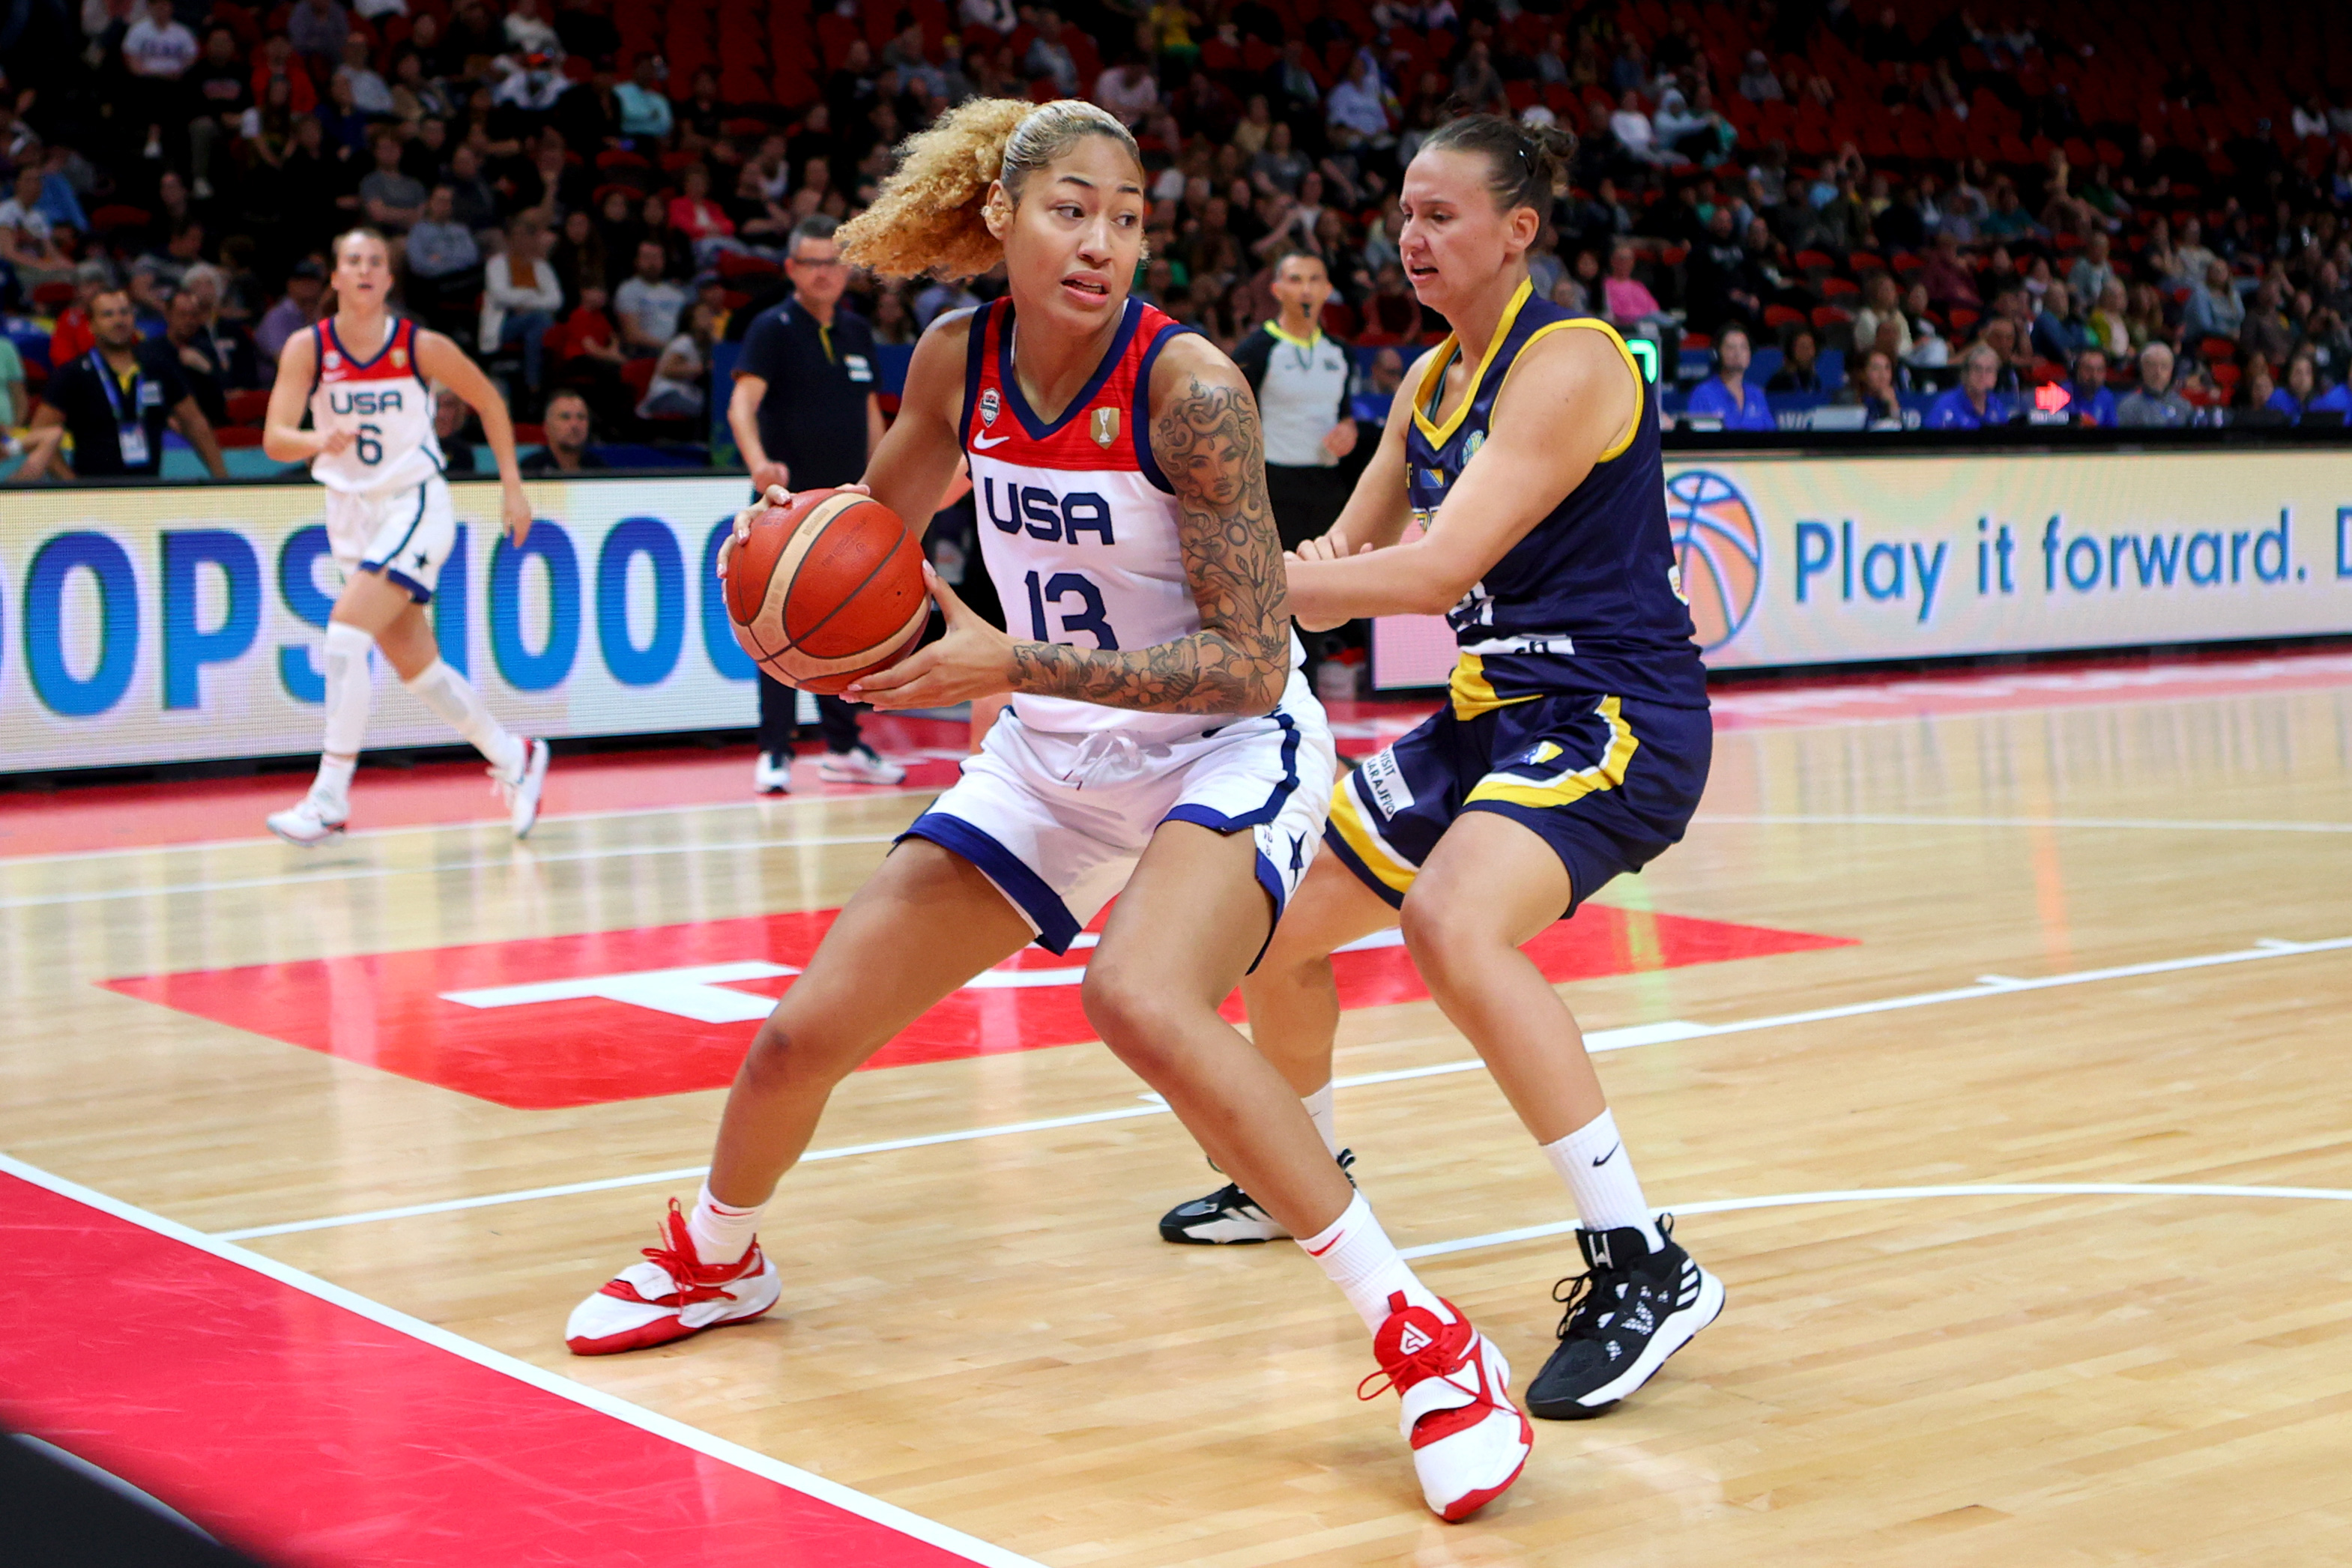 BASKETBALL: SEP 27 FIBA Women’s Basketball World Cup - USA v Bosnia